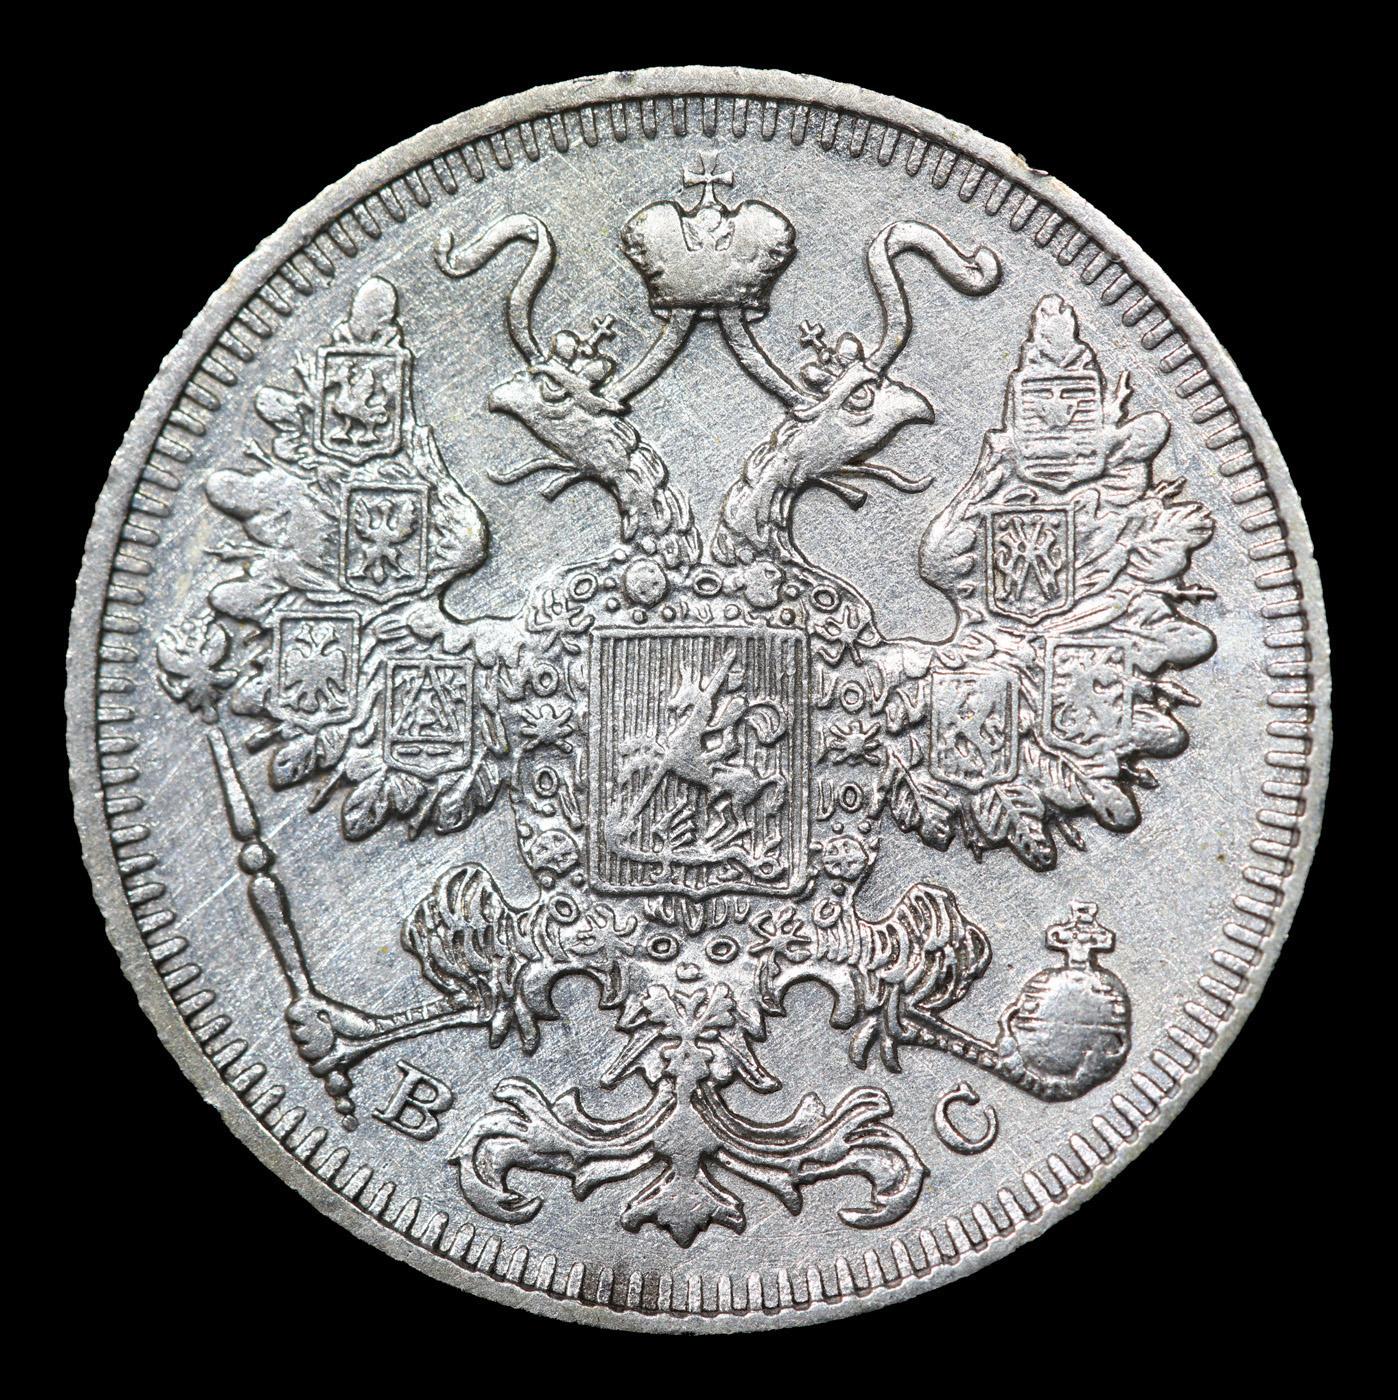 1914 Russia 15 Kopeks Silver Grades GEM Unc